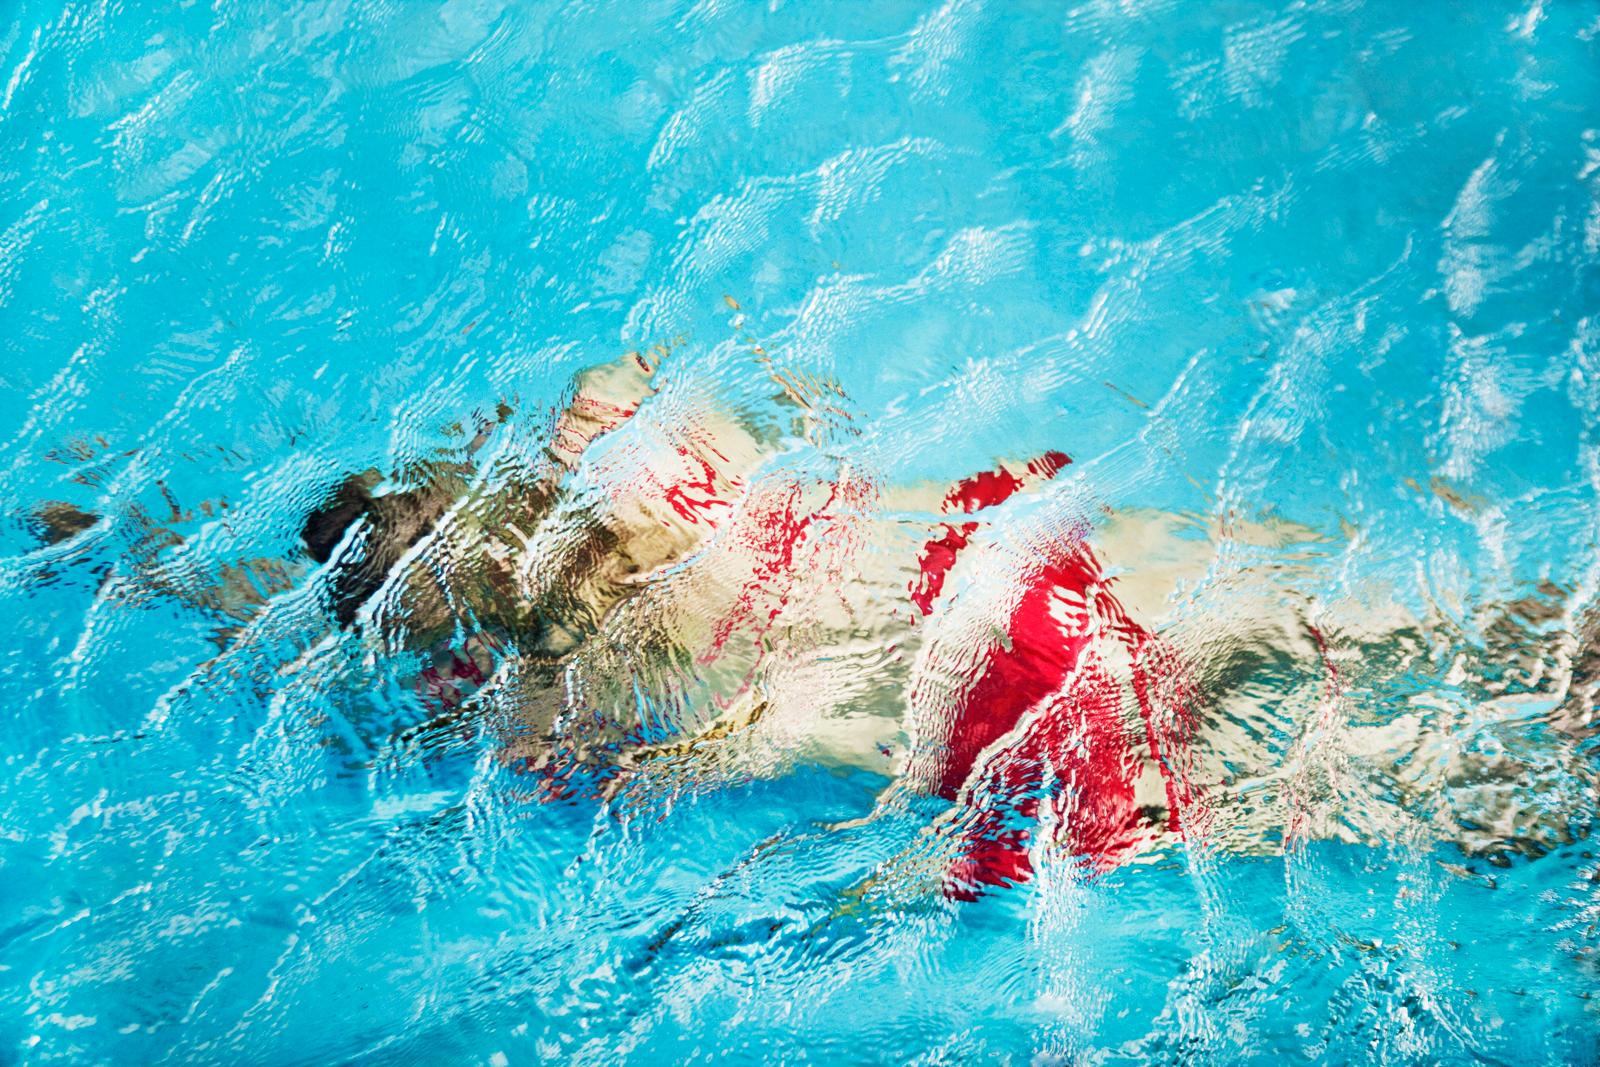 Submerge, Judith II - Print by Cheryl Maeder